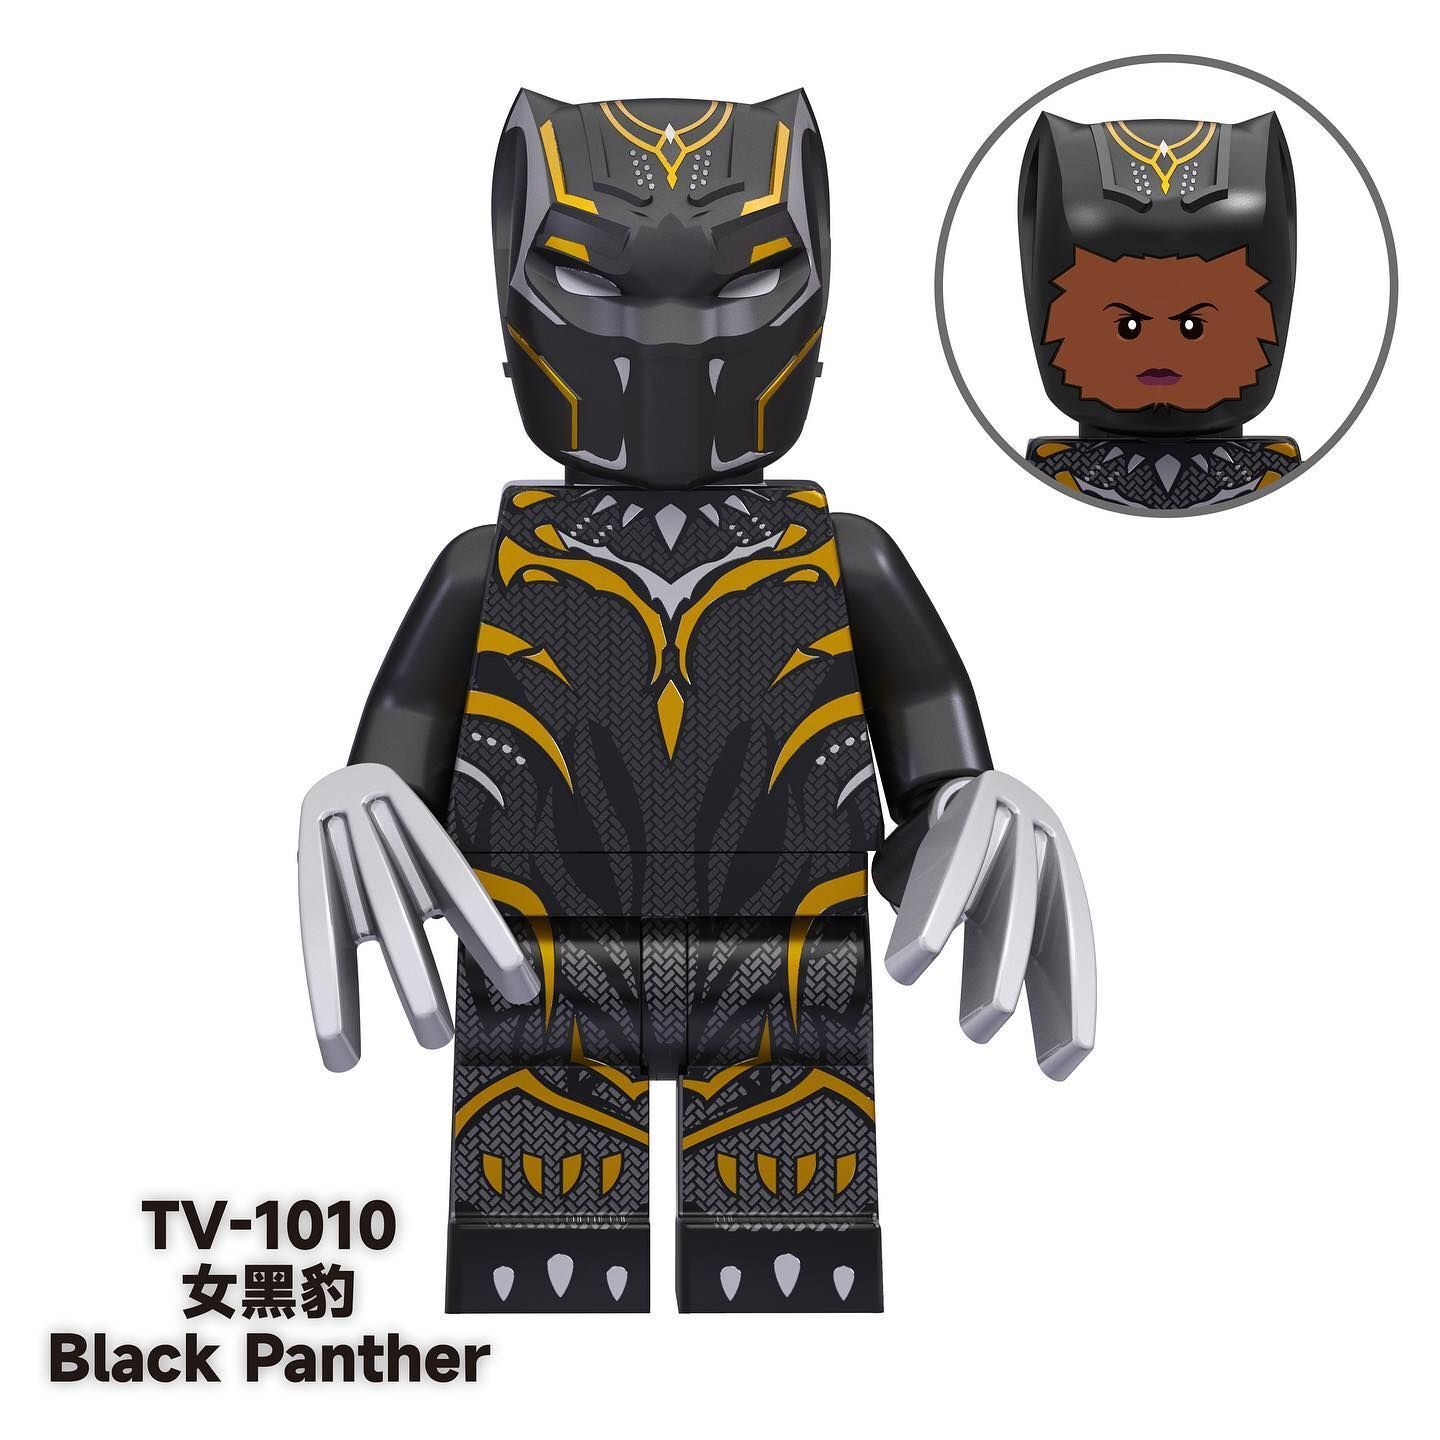 TV1009 TV1010 Super Hero Building Blocks Bricks Black Panther Woman Action Figures Educational Toys For Kids Gifts